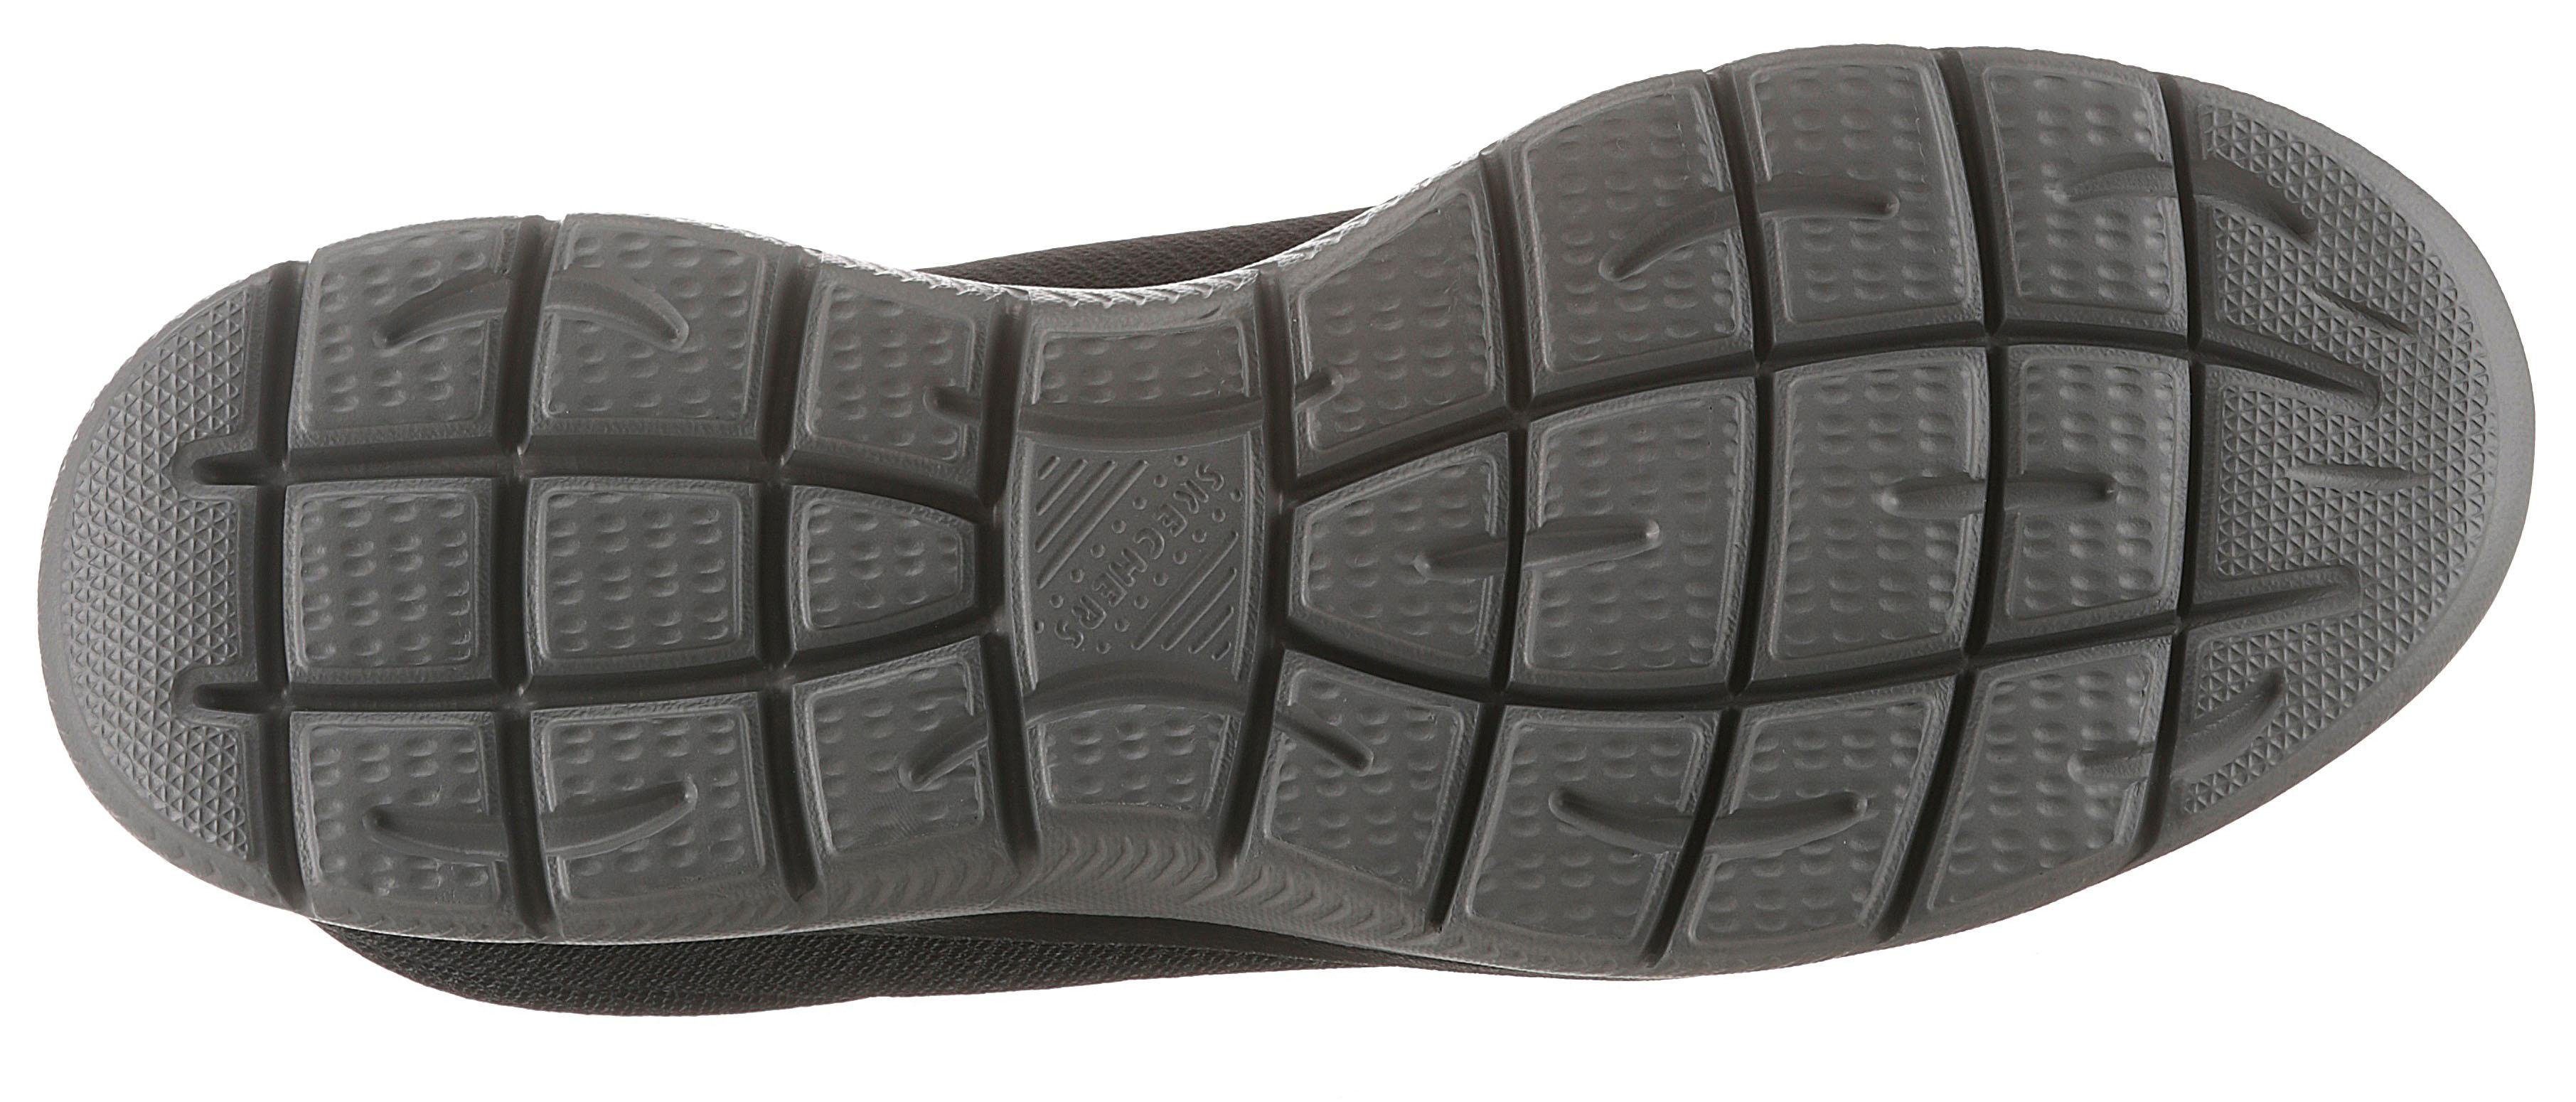 mit komfortabler Slip-On Foam-Ausstattung Memory Summits Sneaker black/charcoal Skechers